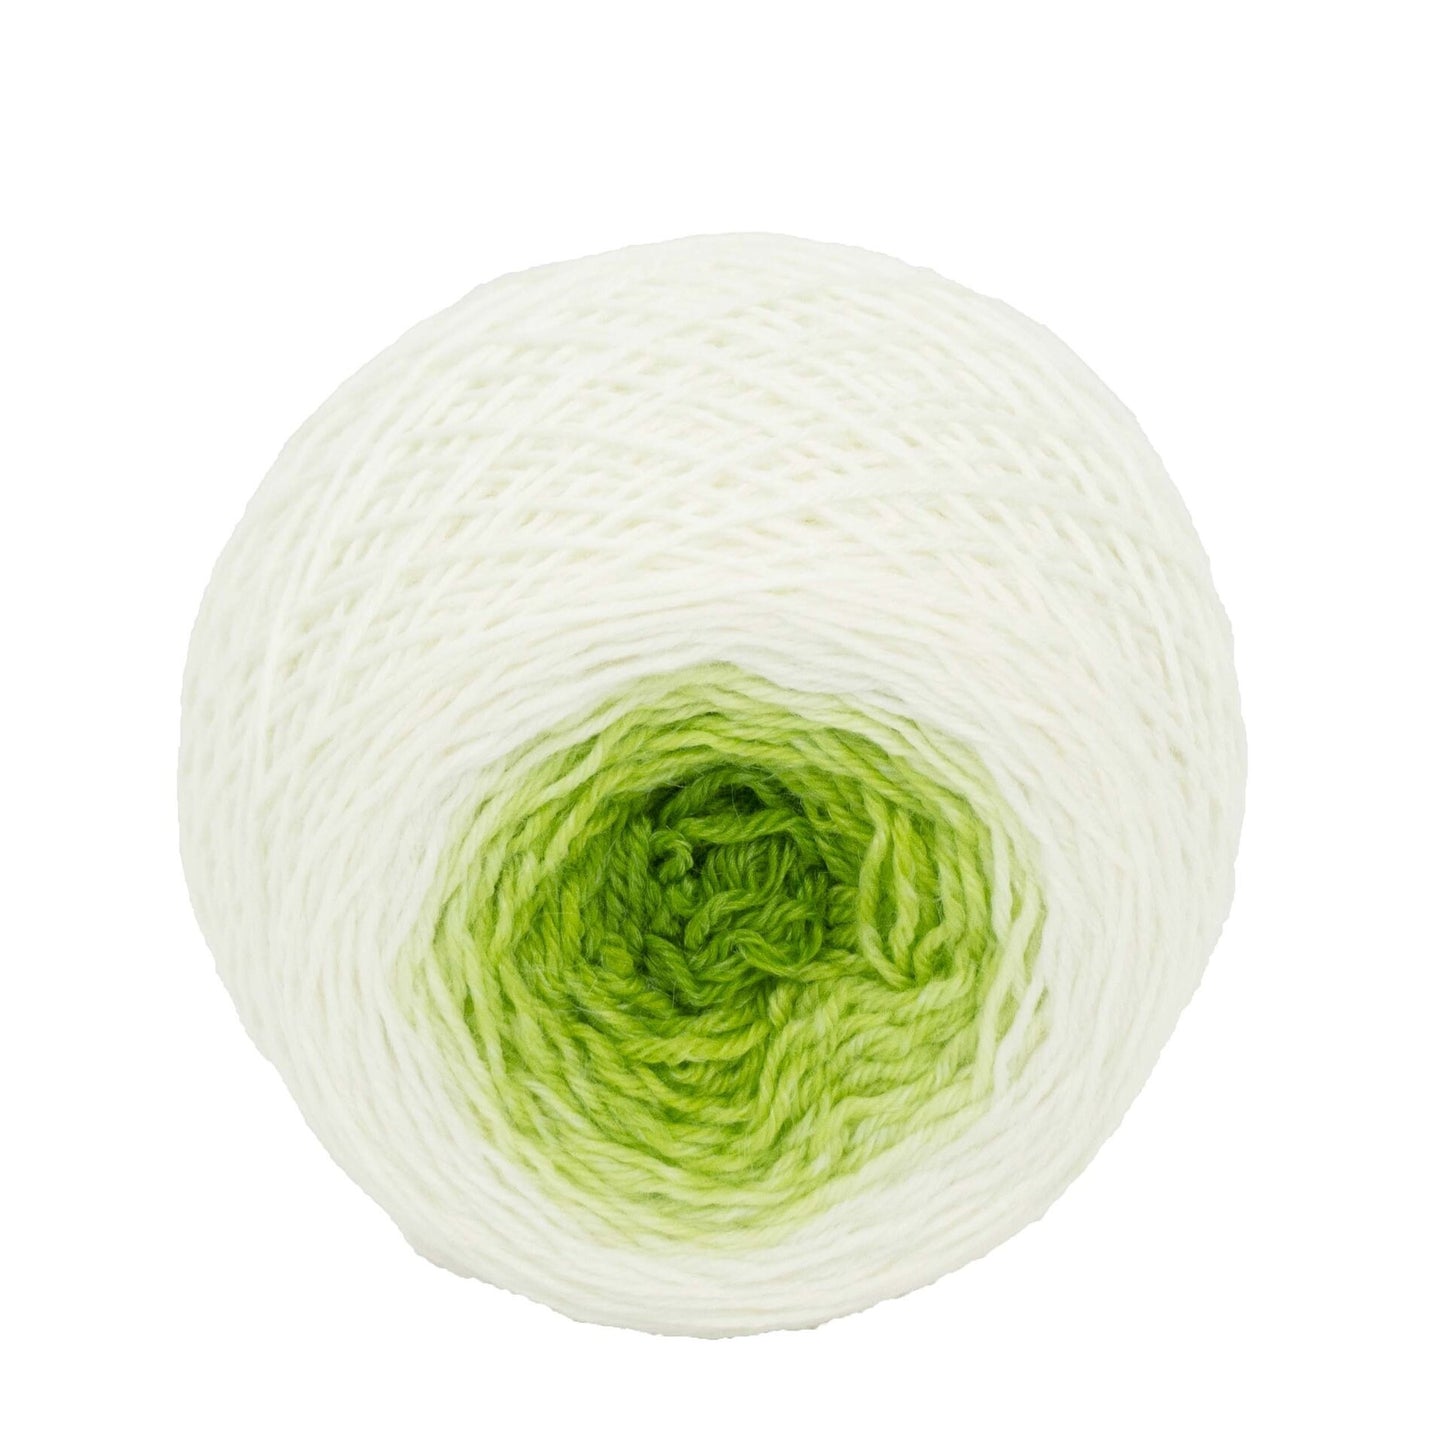 Full " Sprout " - Lleaf SW Merino/Bamboo/Nylon Handpainted Gradient Fingering Weight Yarn 100g Skein